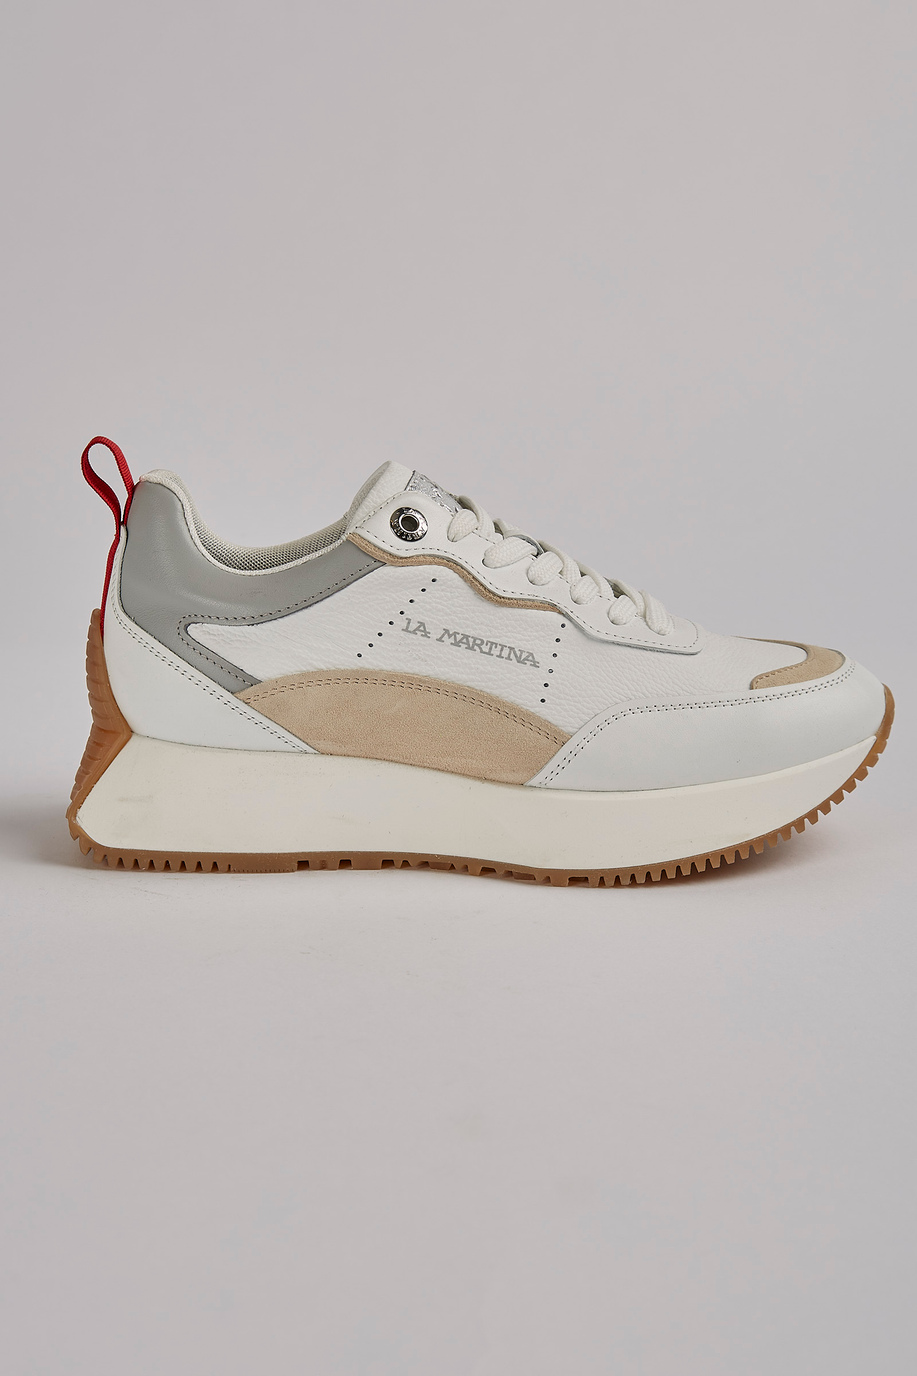 Mixed material sneaker - Woman shoes | La Martina - Official Online Shop